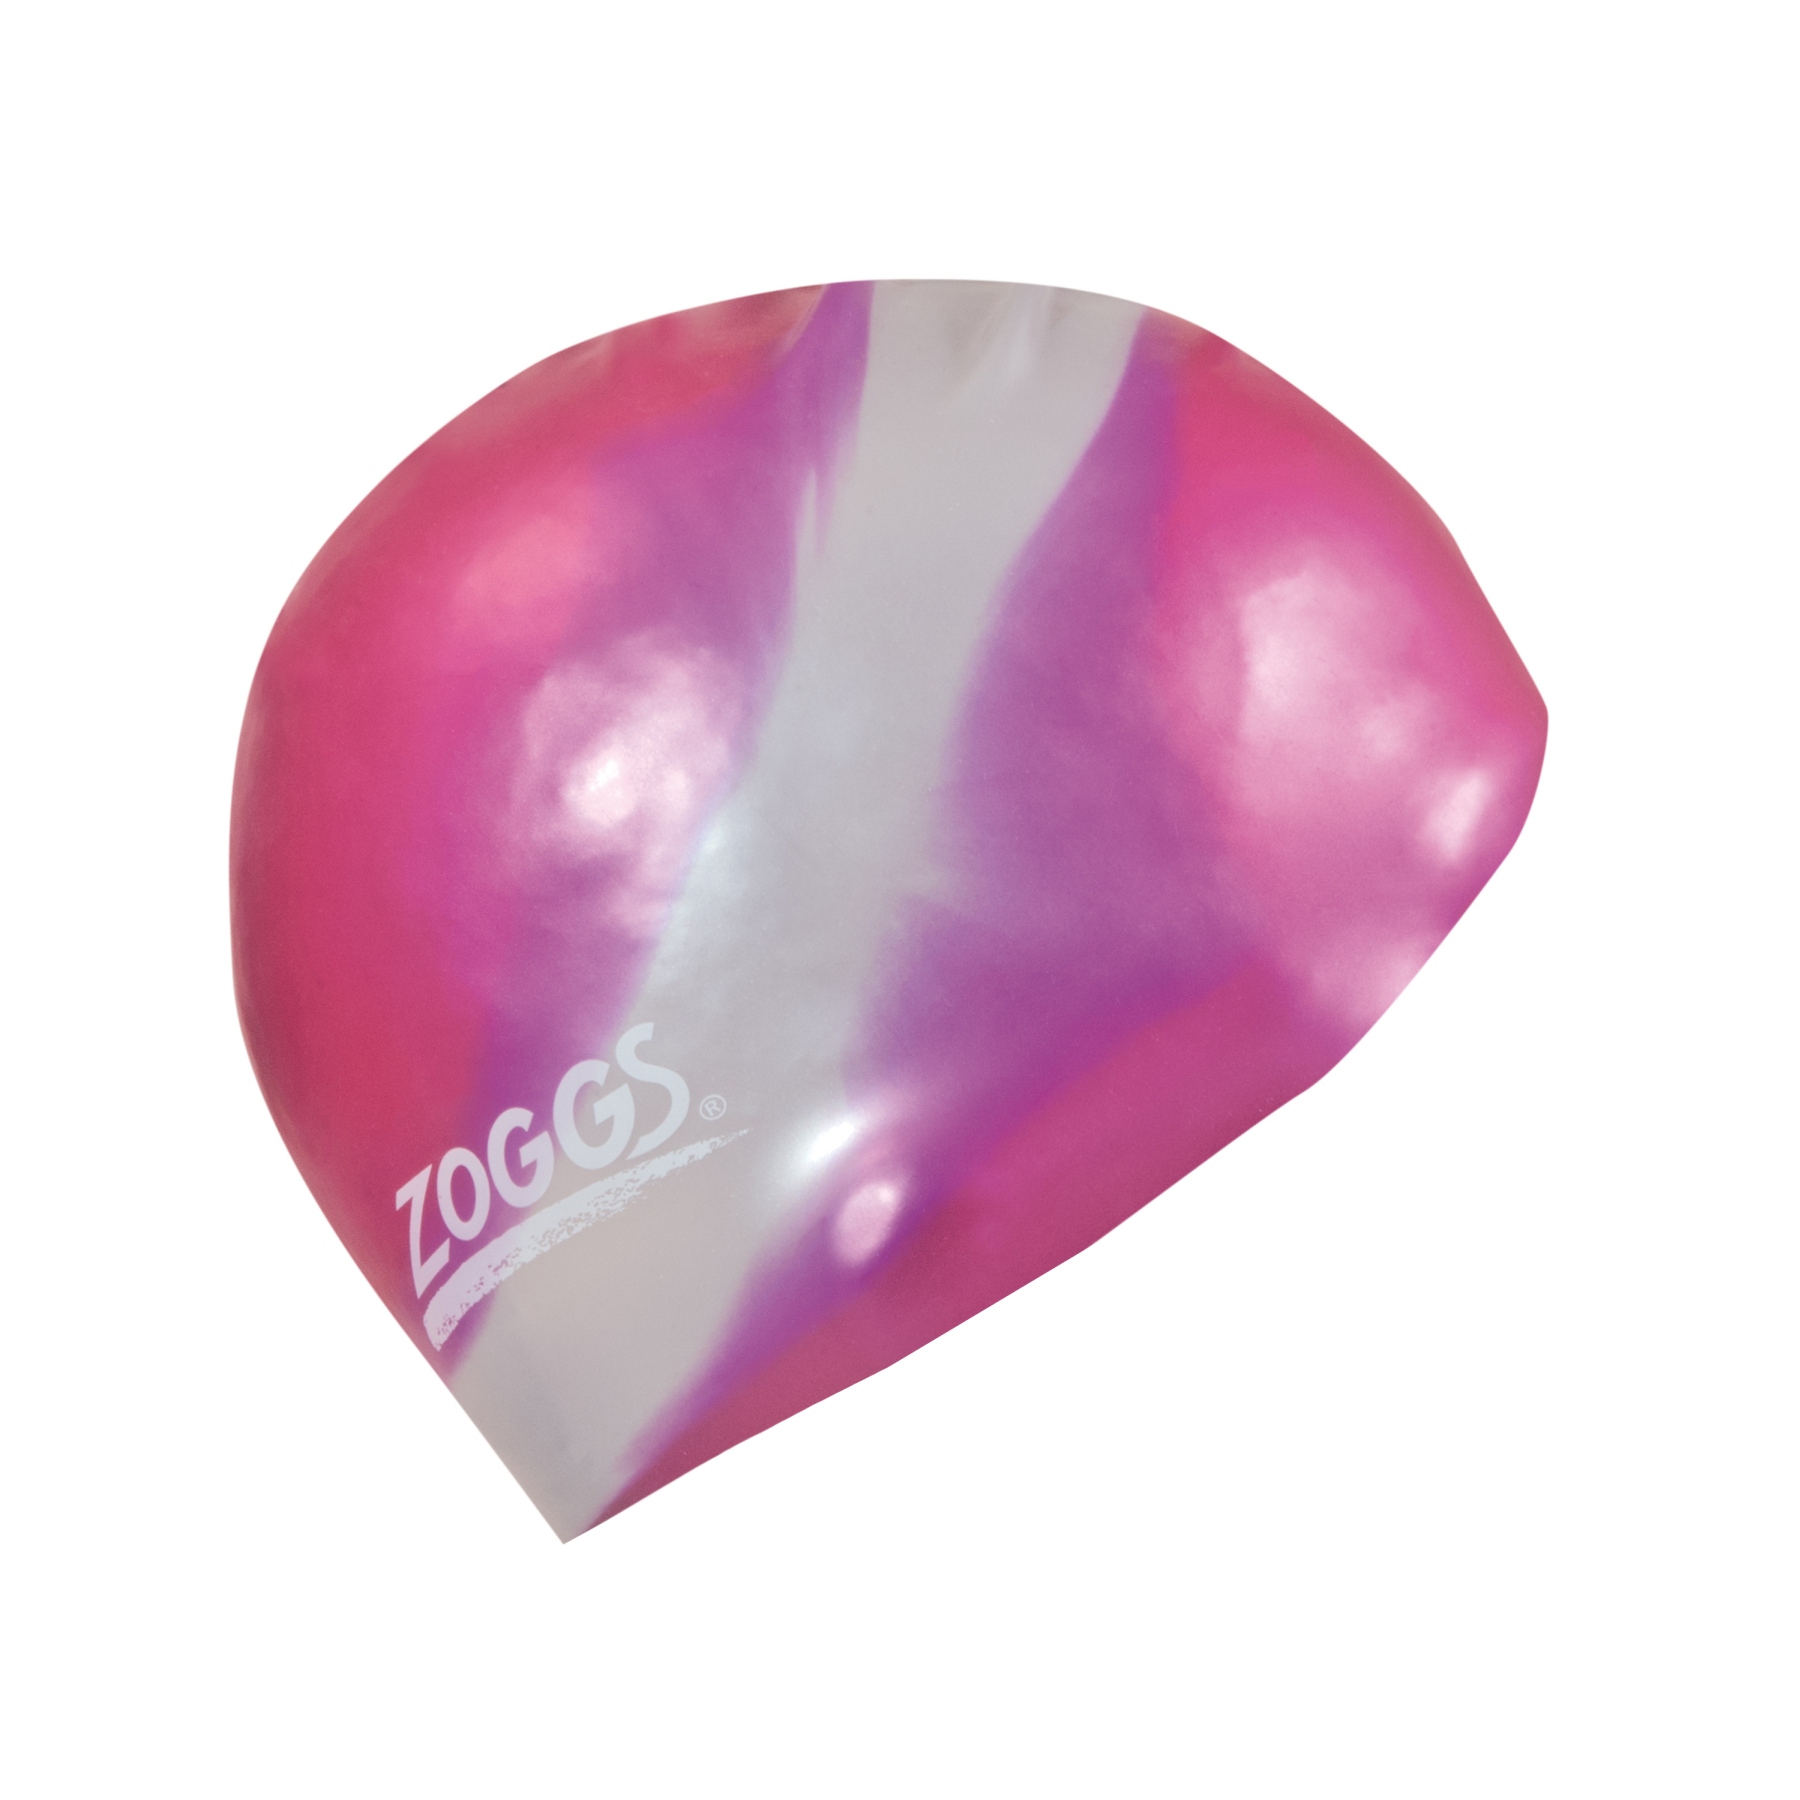 Produktbild von Zoggs Multi Colour Silicone Schwimmkappe - Pink/Silver